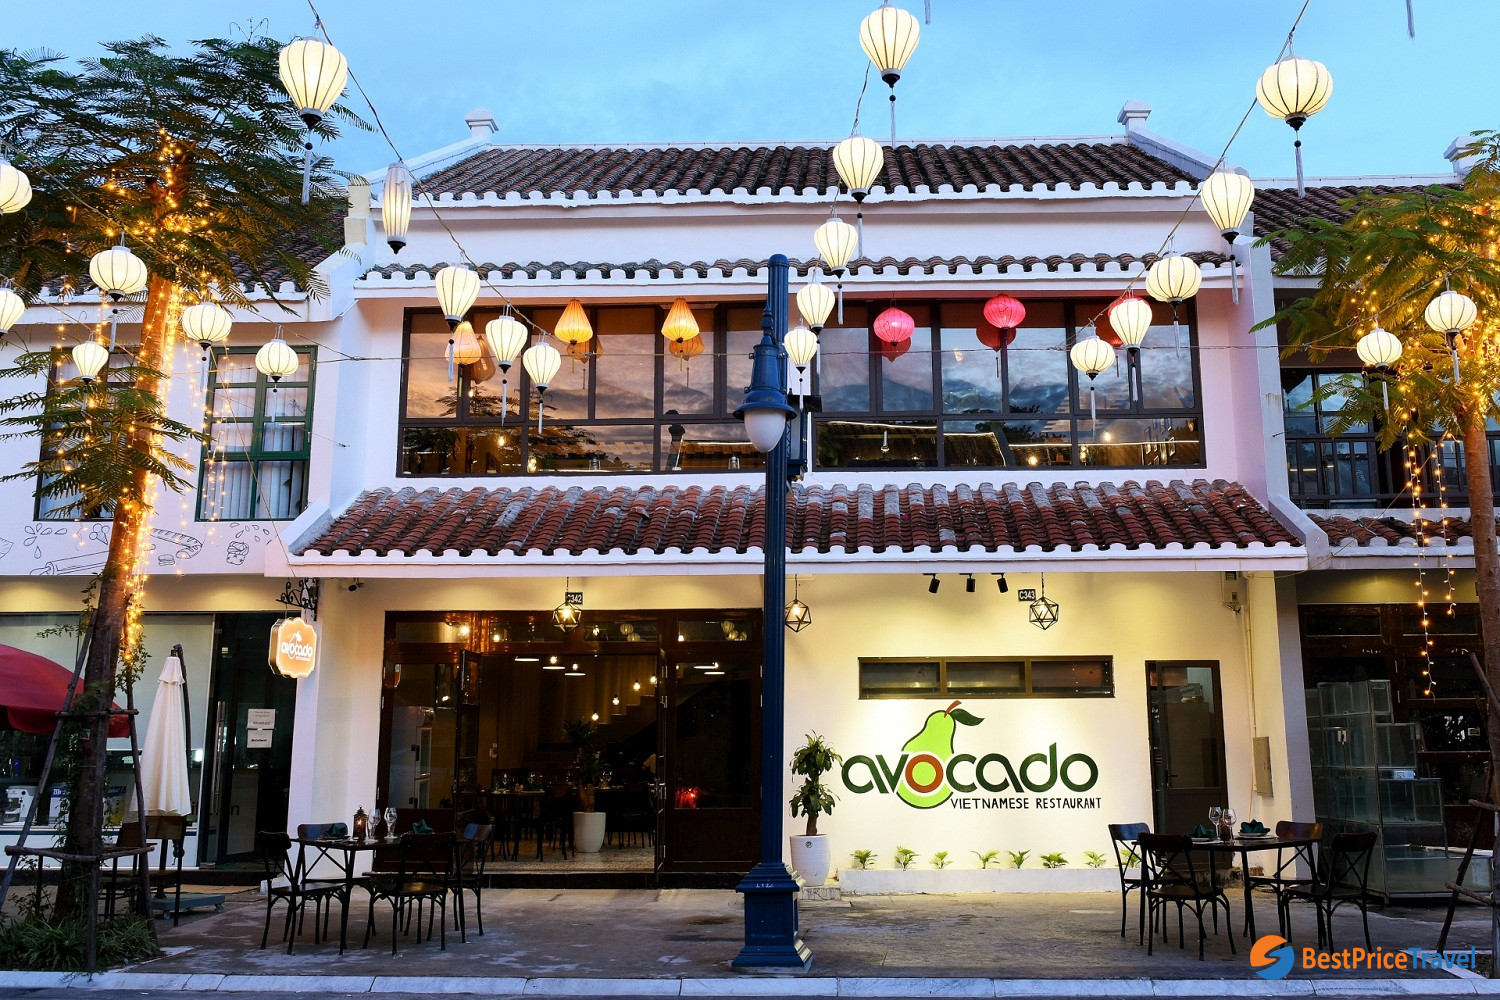 Avocado Restaurant in Halong Bay